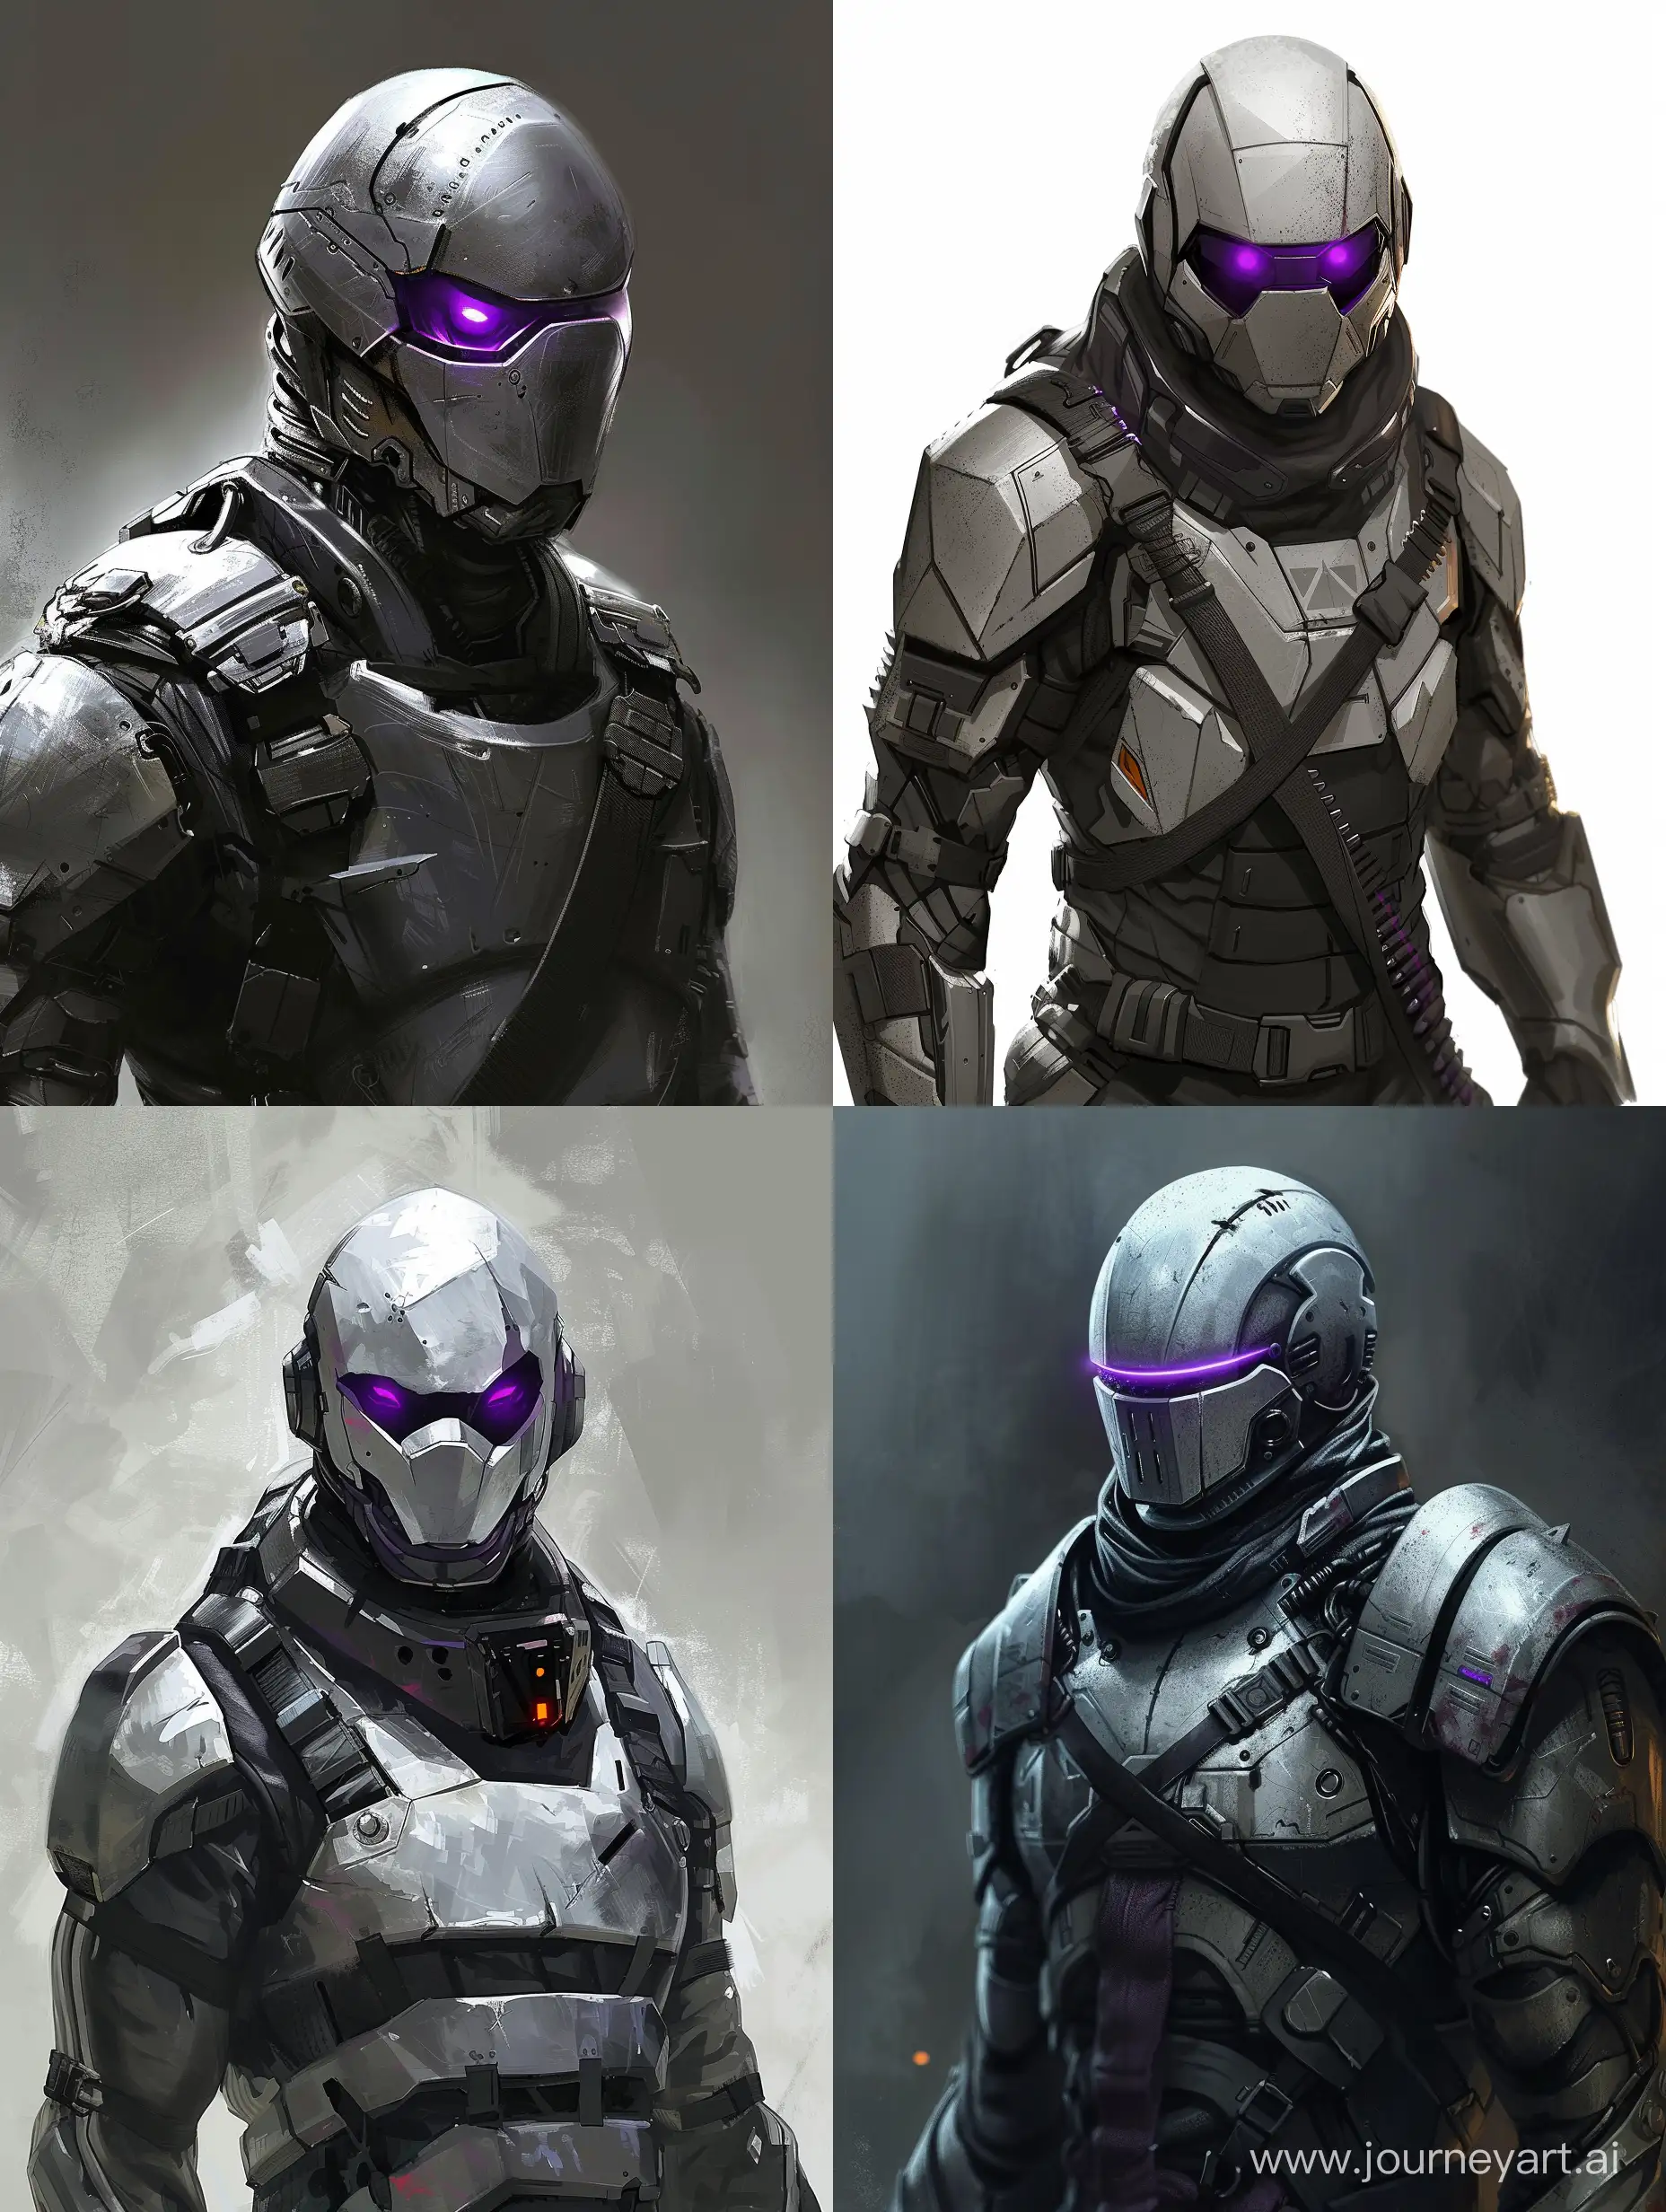 fantasy art, comics manga style, Character concept art, shradder armor, purple eyes silver tactical suit, dark sci fi mask